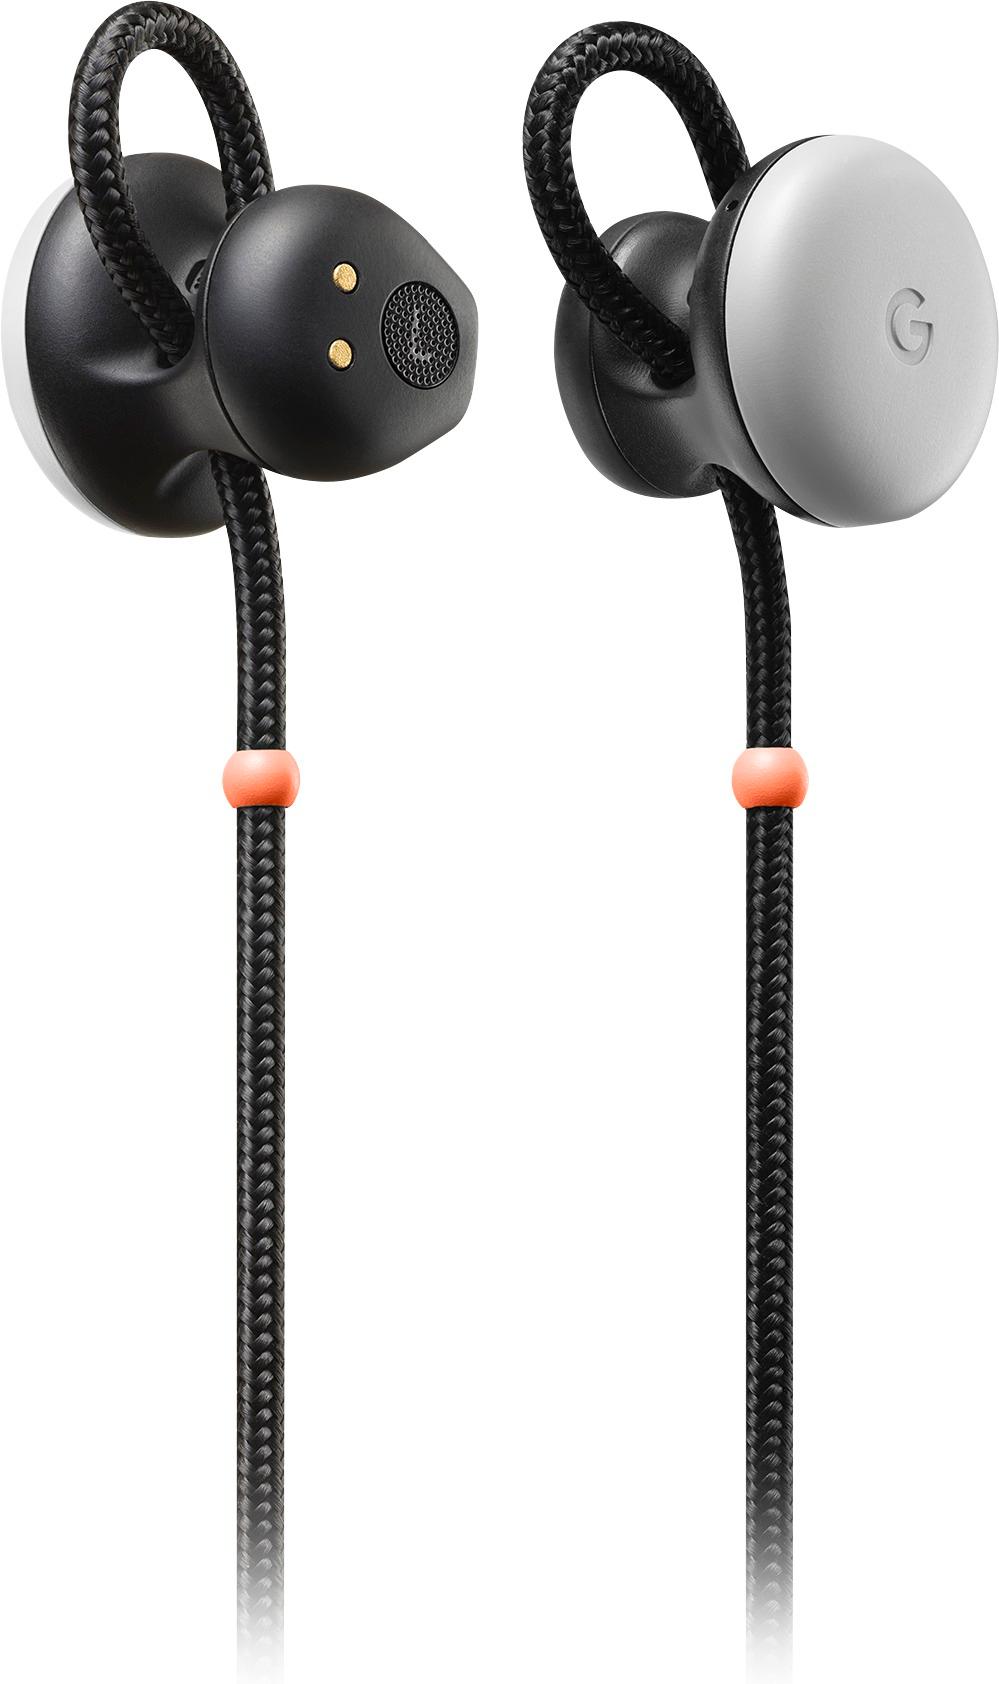 Google Pixel Buds A-Series TWS earphones get a new color option -   news